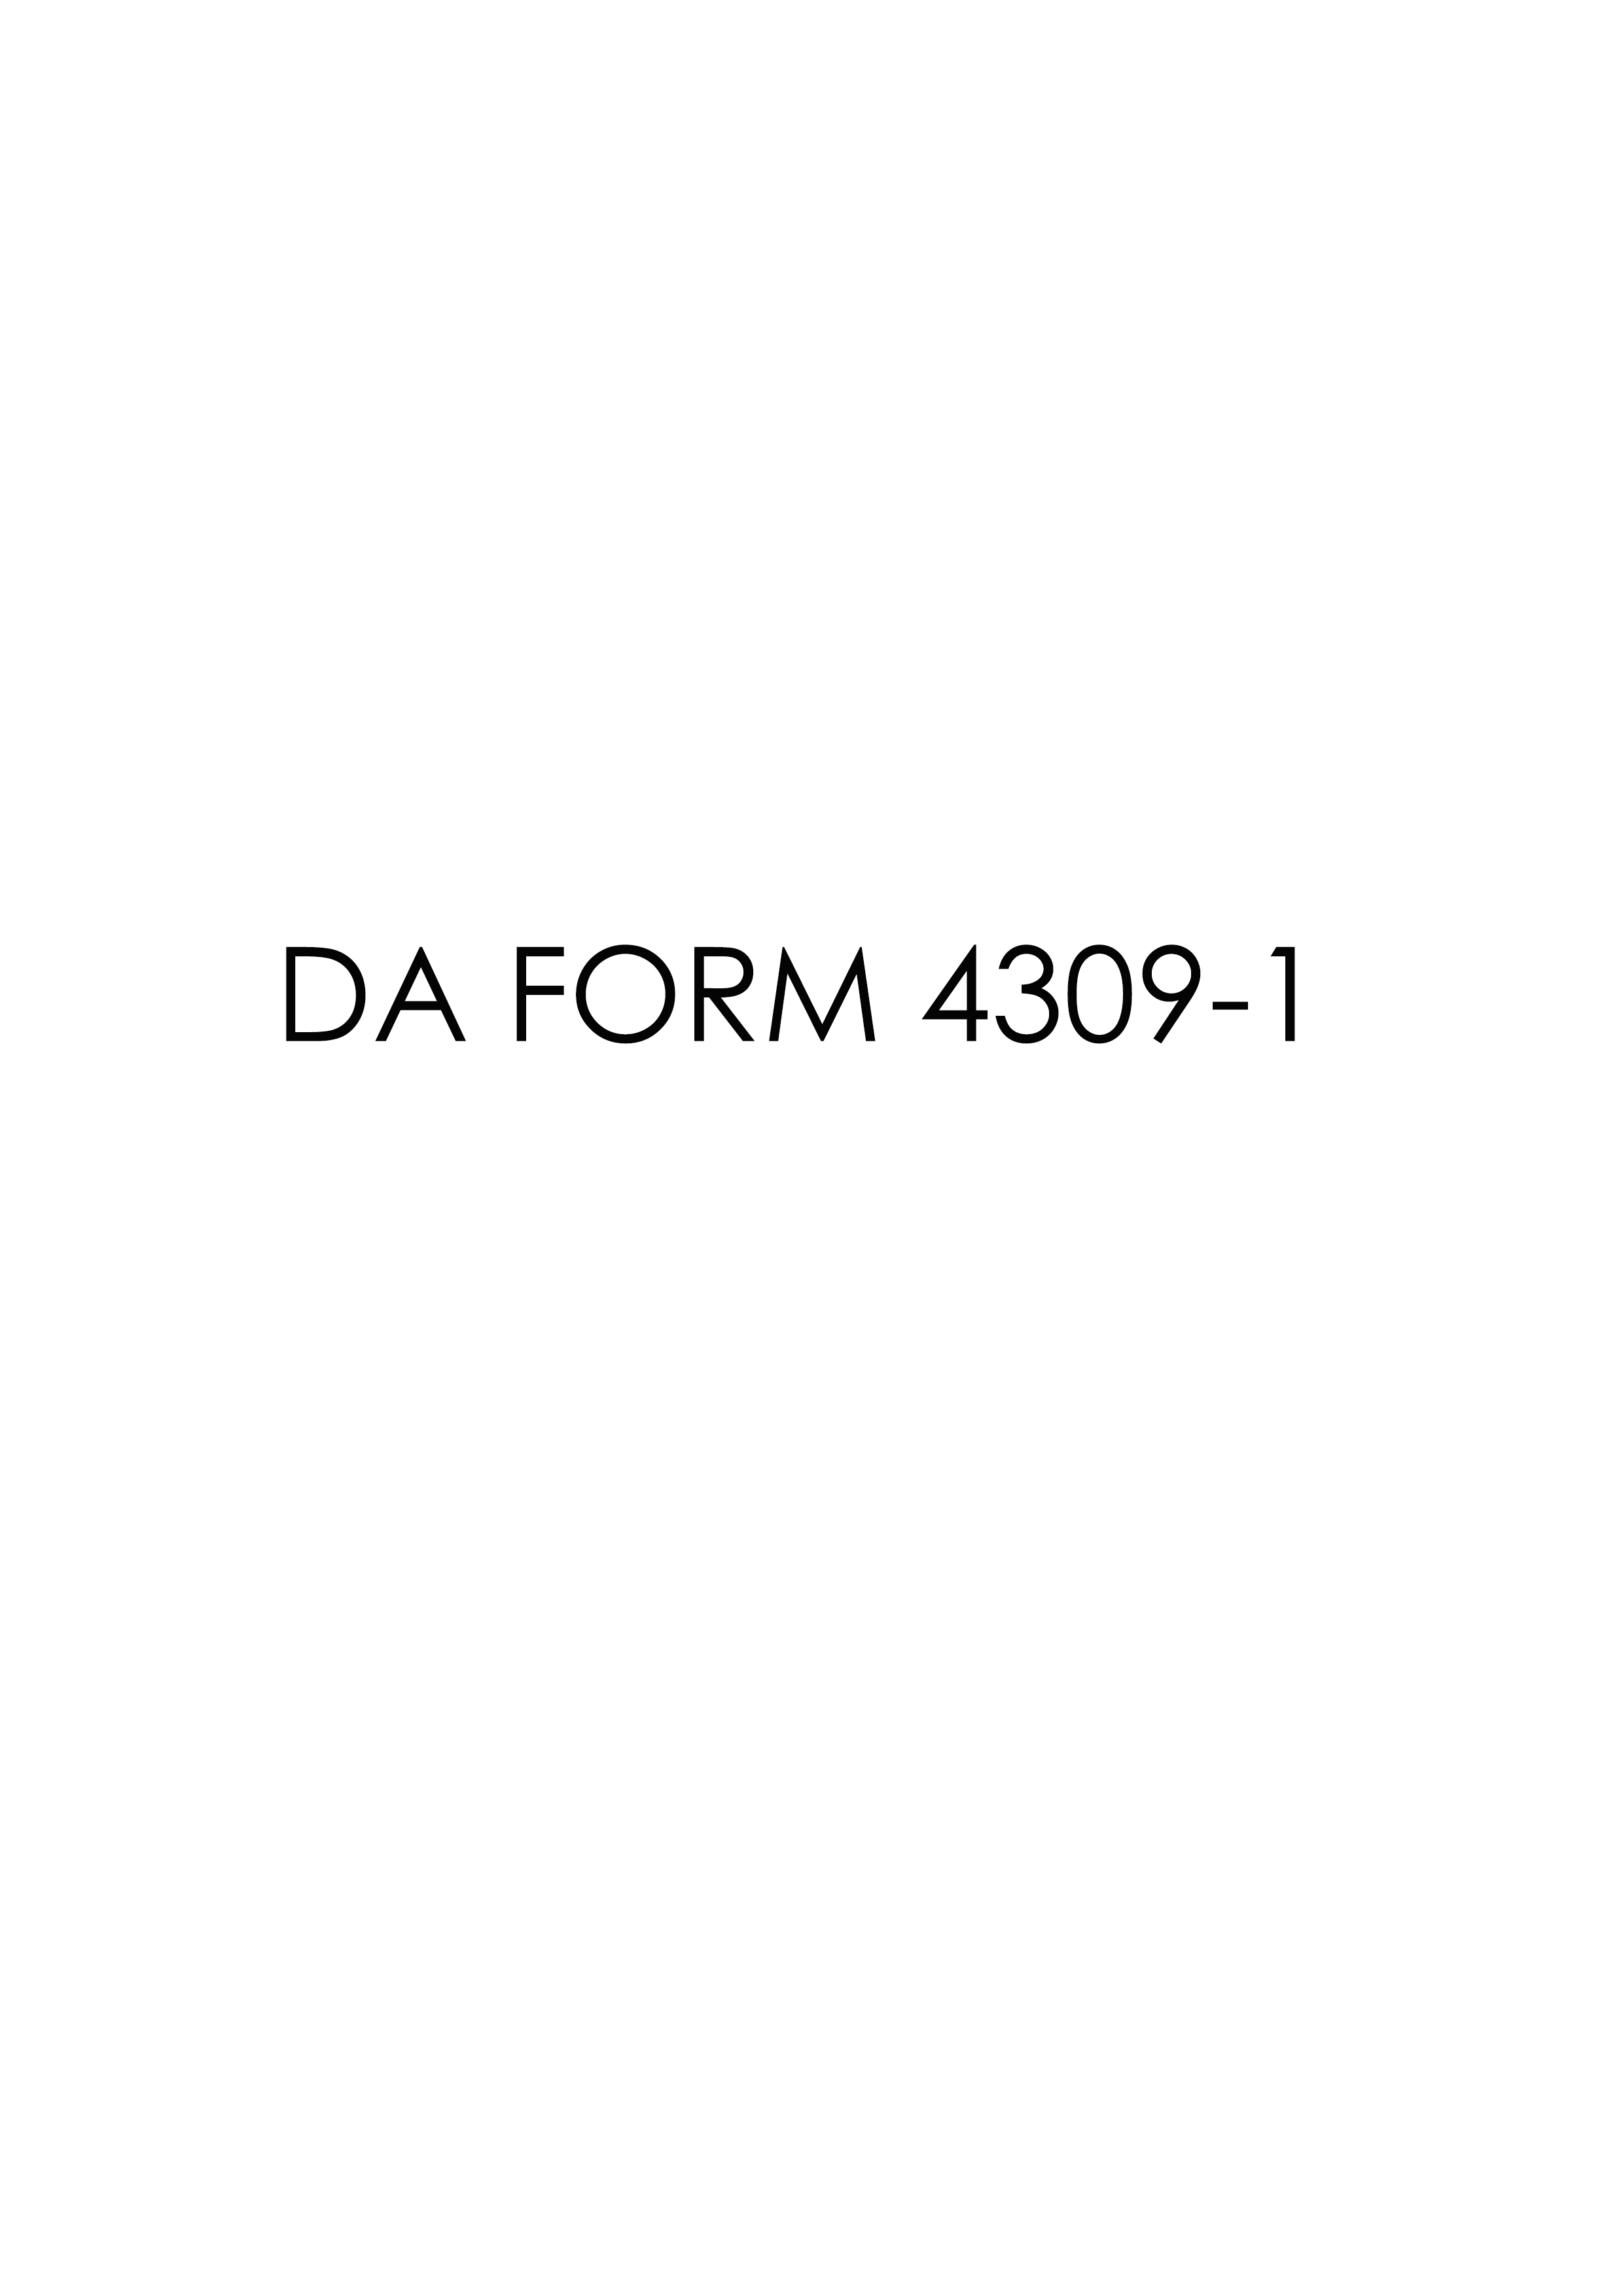 da Form 4309-1 fillable